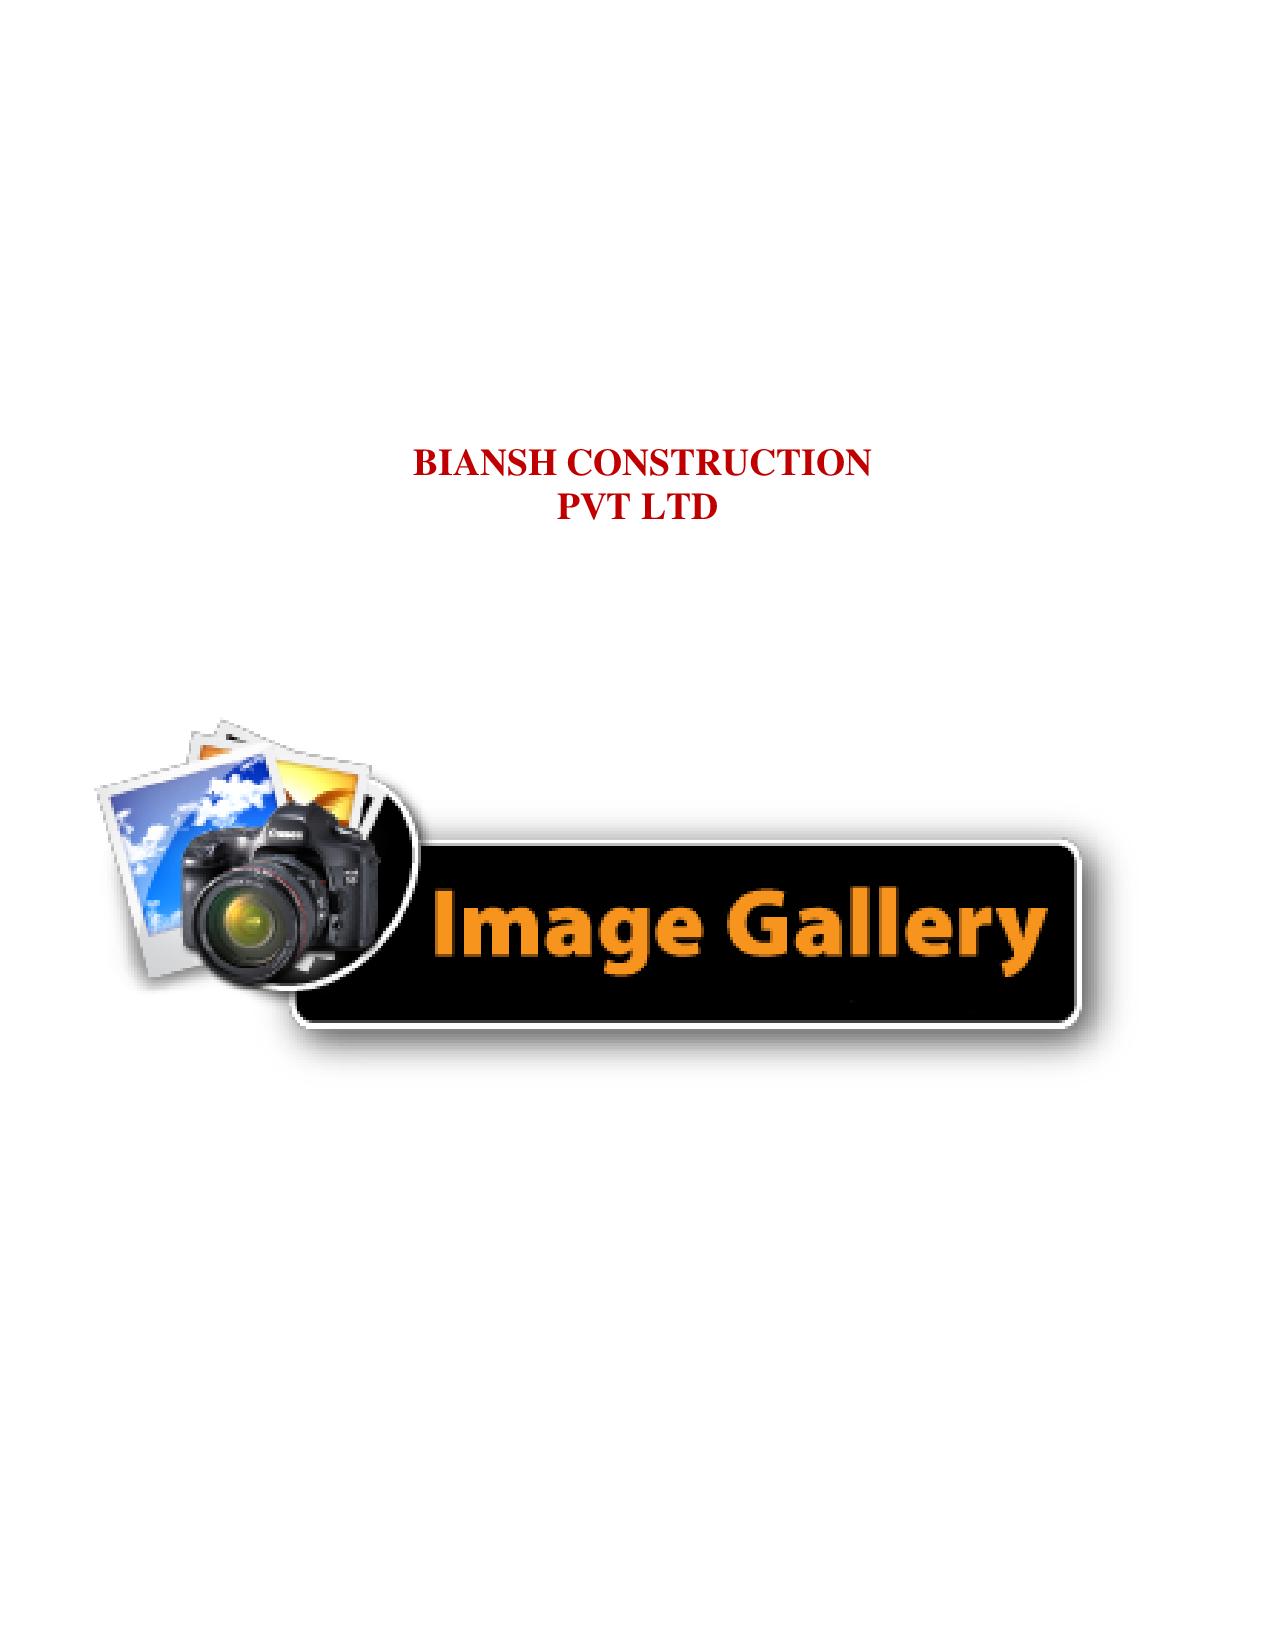 Profile of Biansh Construction Pvt. Ltd.